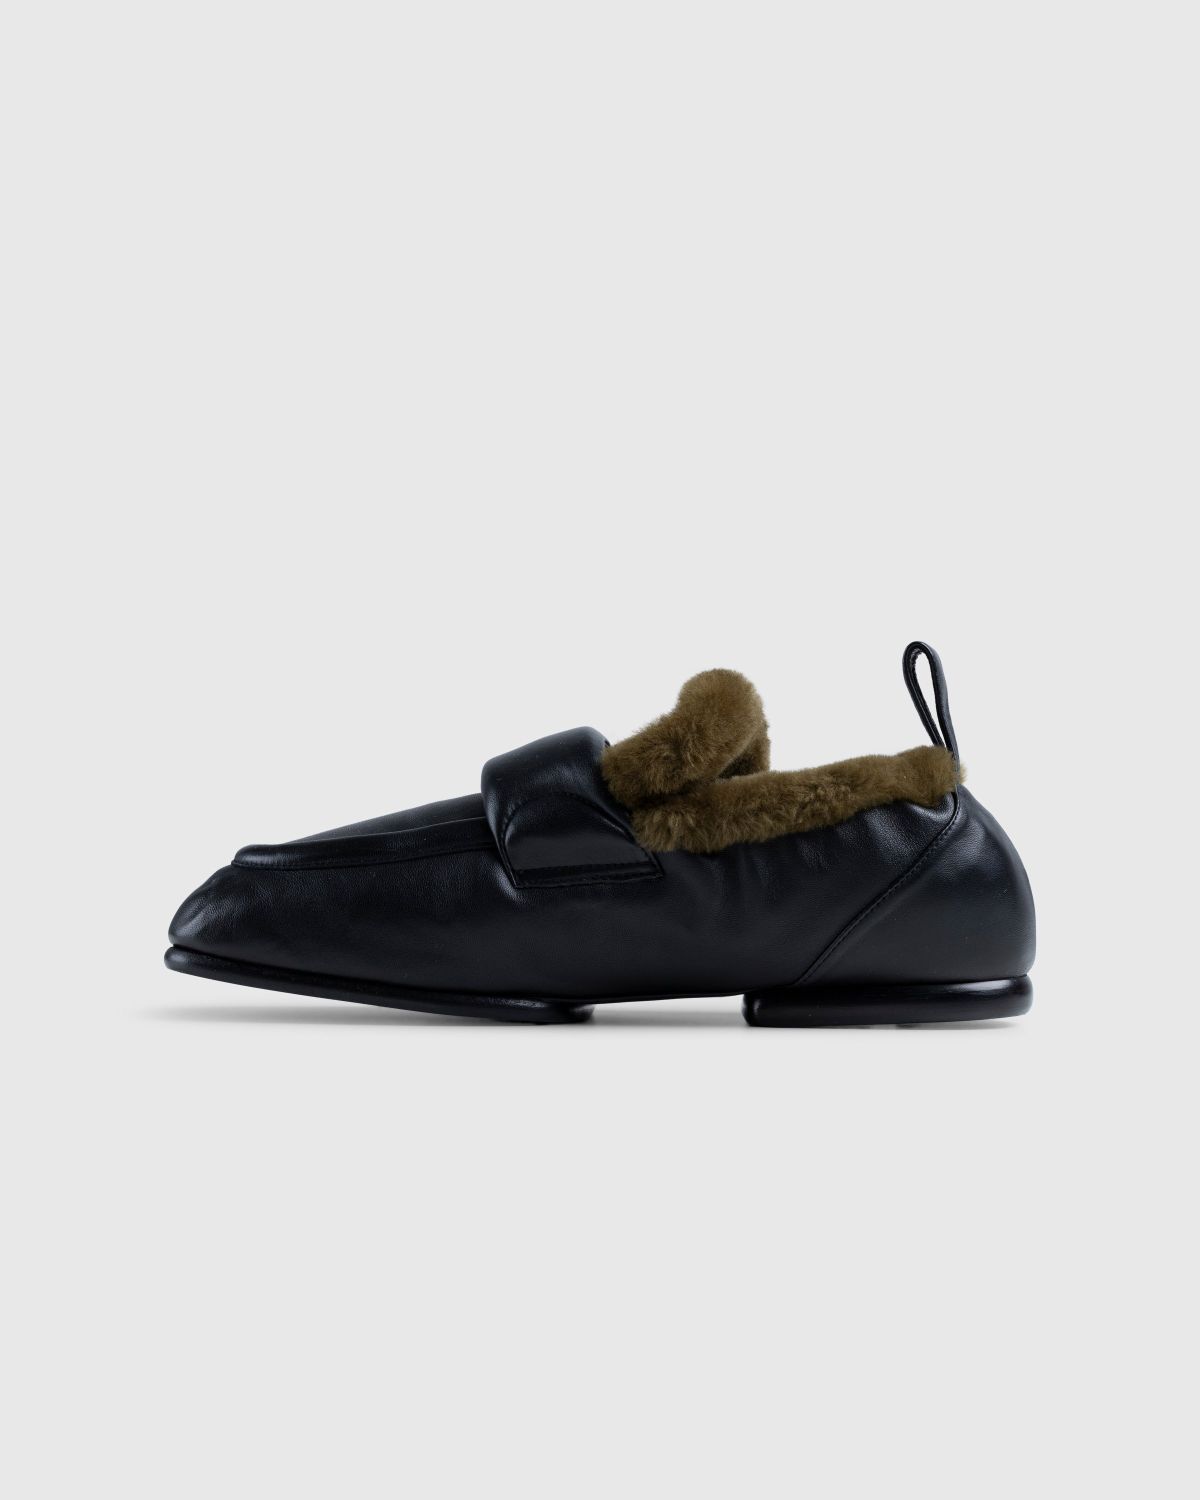 Dries van Noten – Padded Faux Fur Loafers Black - Sandals & Slides - Black - Image 2